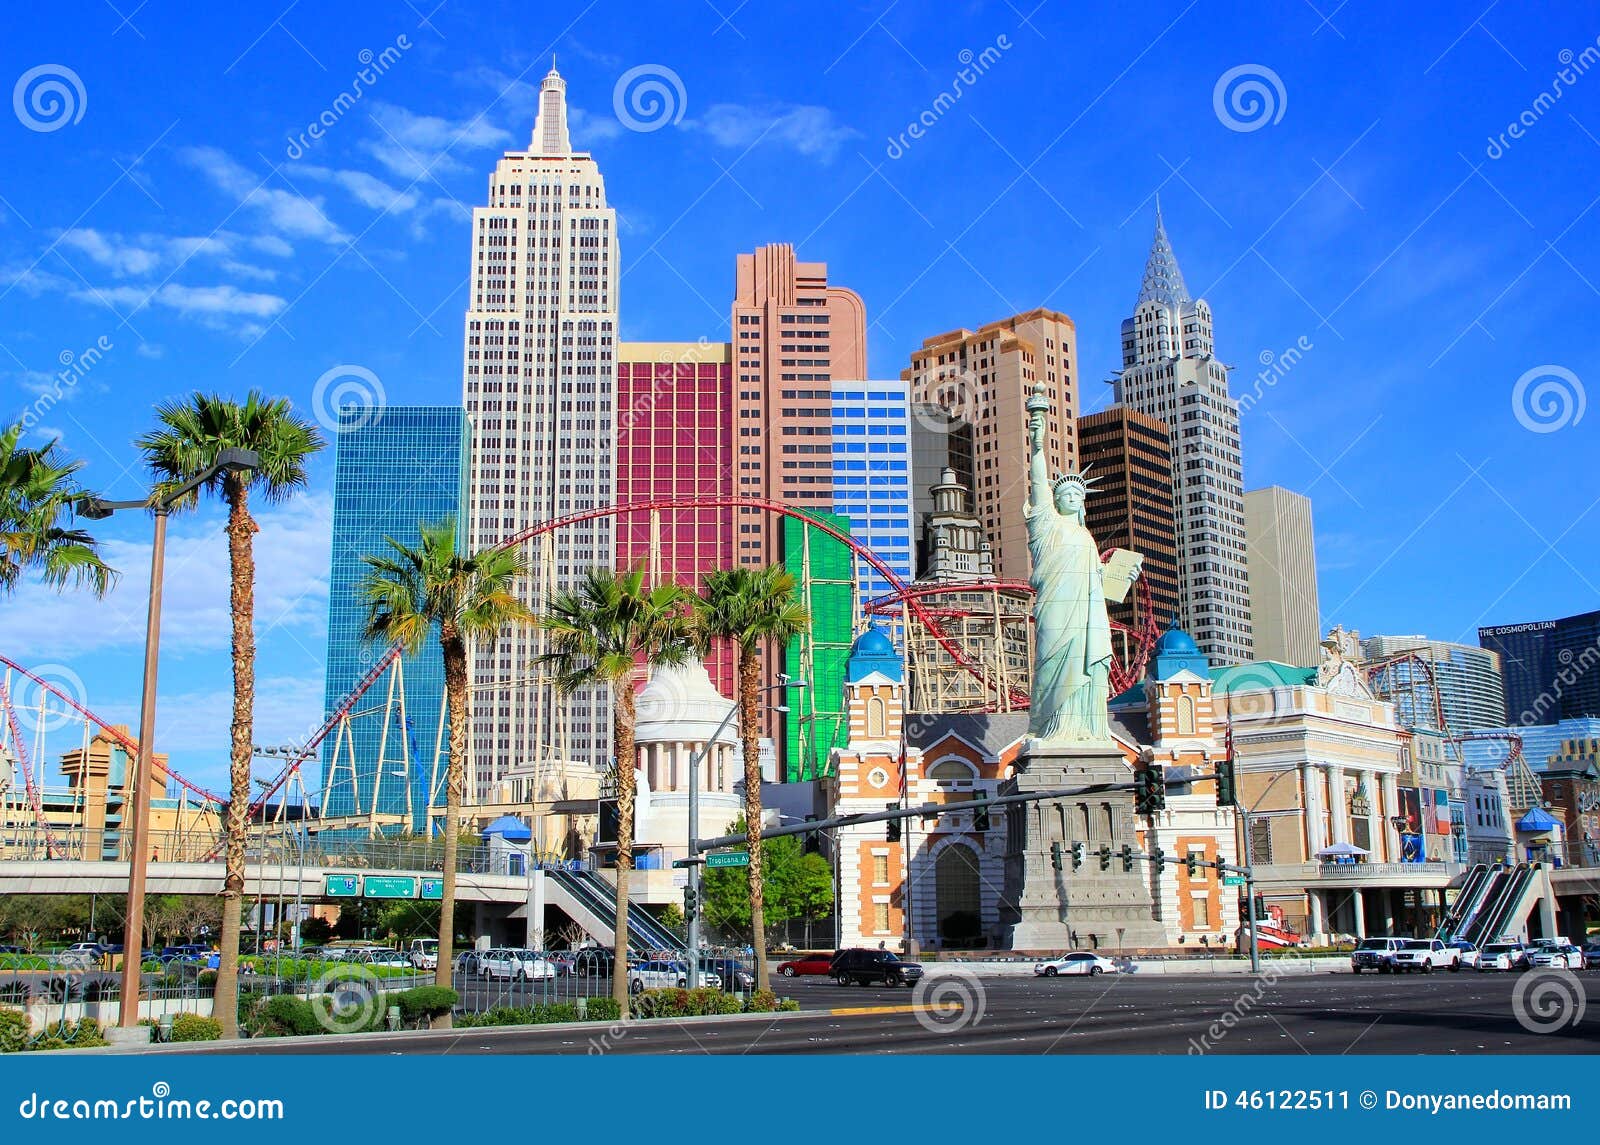 File:Las Vegas New York-New York Hotel & Casino - 51194529551.jpg